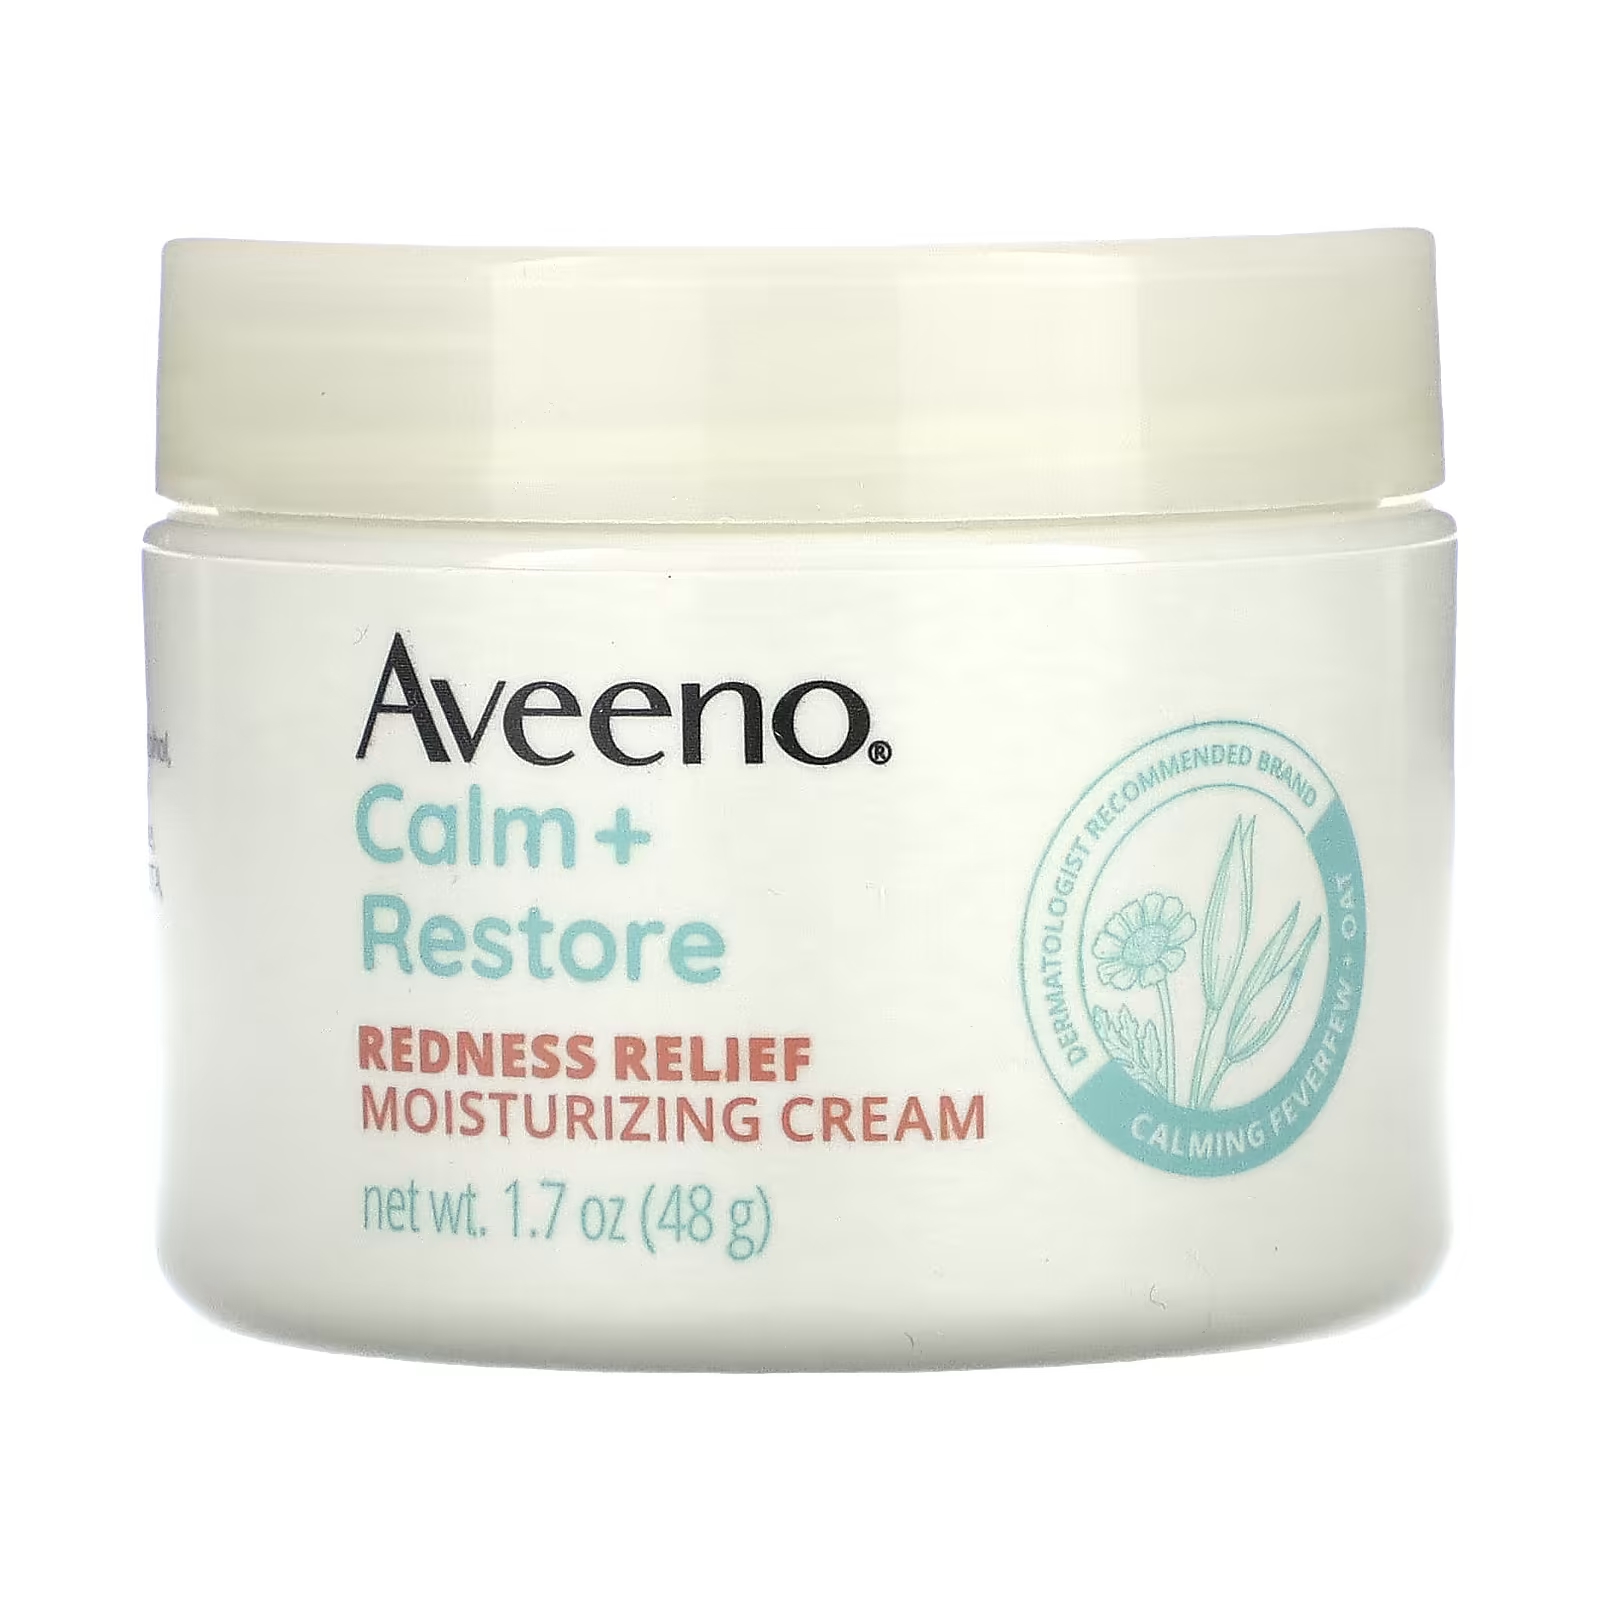 Aveeno Calm + Restore Увлажняющий крем для снятия покраснений для чувствительной кожи, без ароматизаторов, 1,7 унции (48 г) aveeno calm restore бальзам для ухода за кожей без отдушек 48 г 1 7 унции